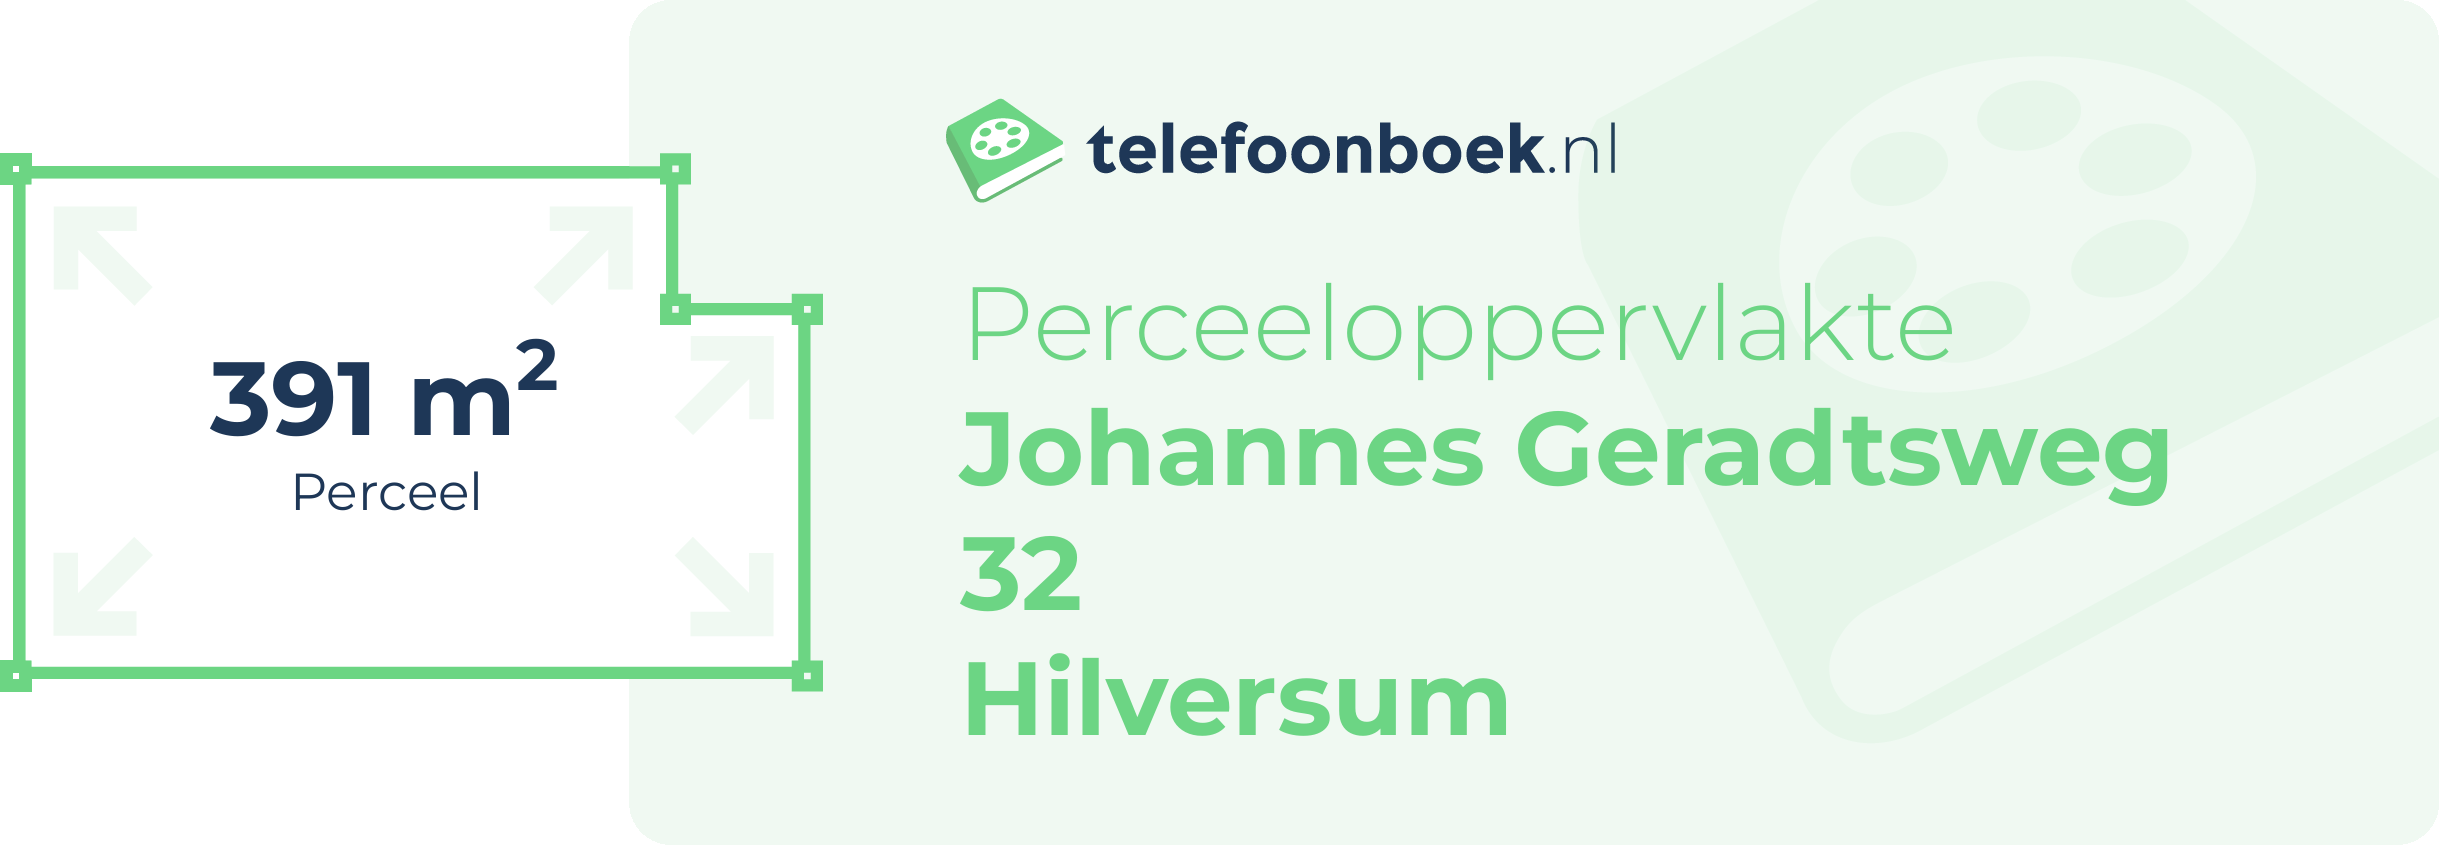 Perceeloppervlakte Johannes Geradtsweg 32 Hilversum